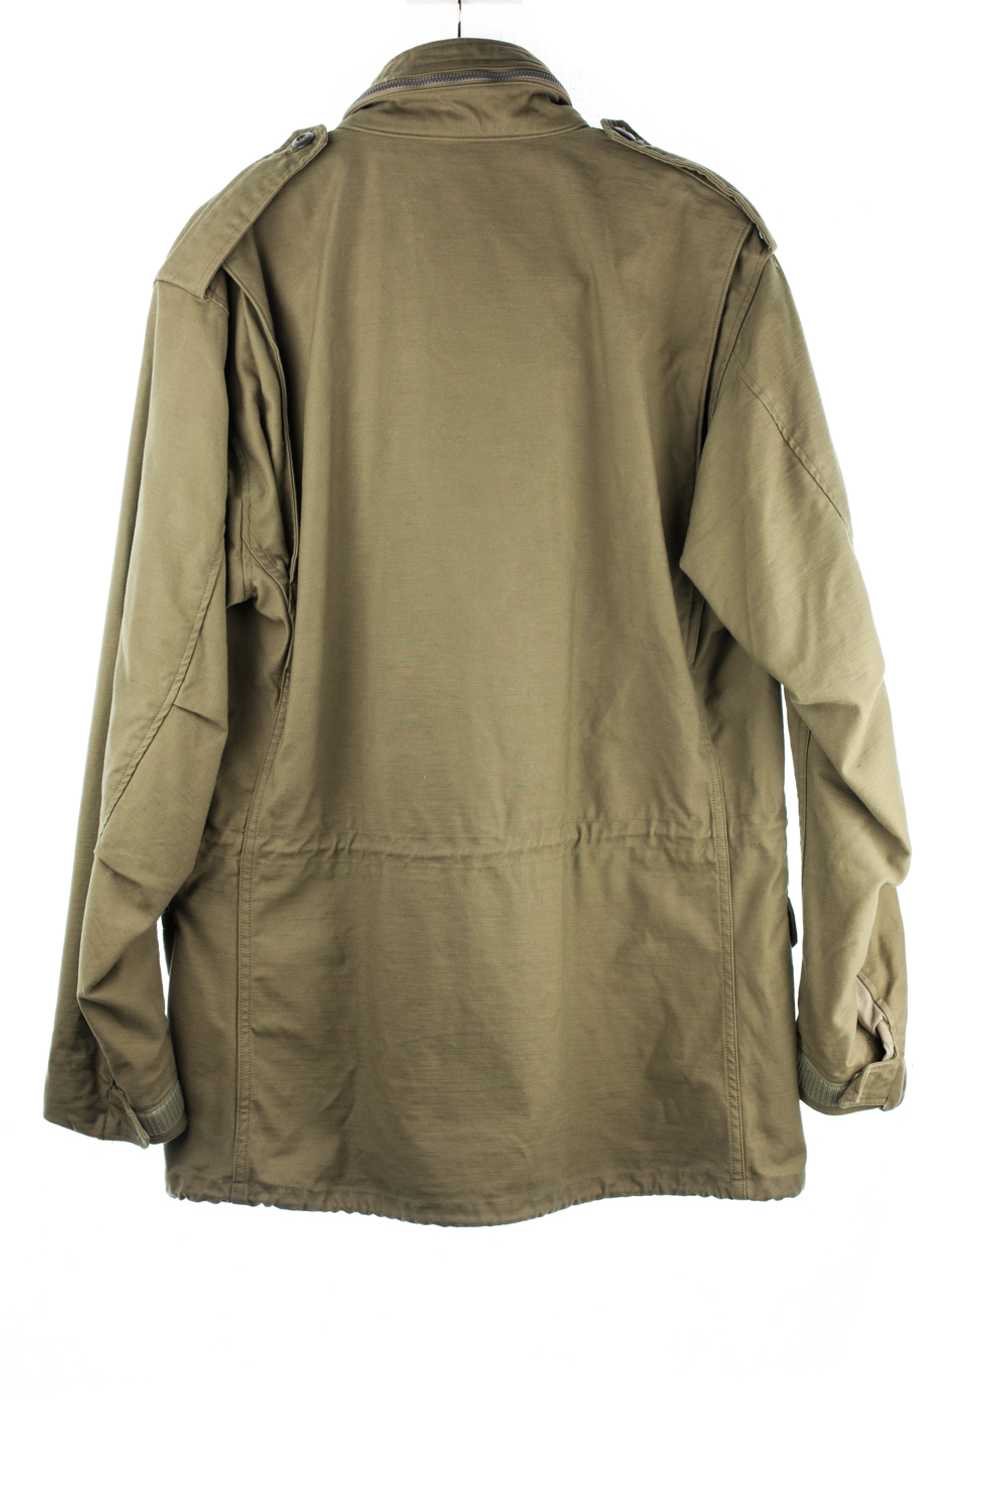 Olive M-65 Field Jacket - image 2